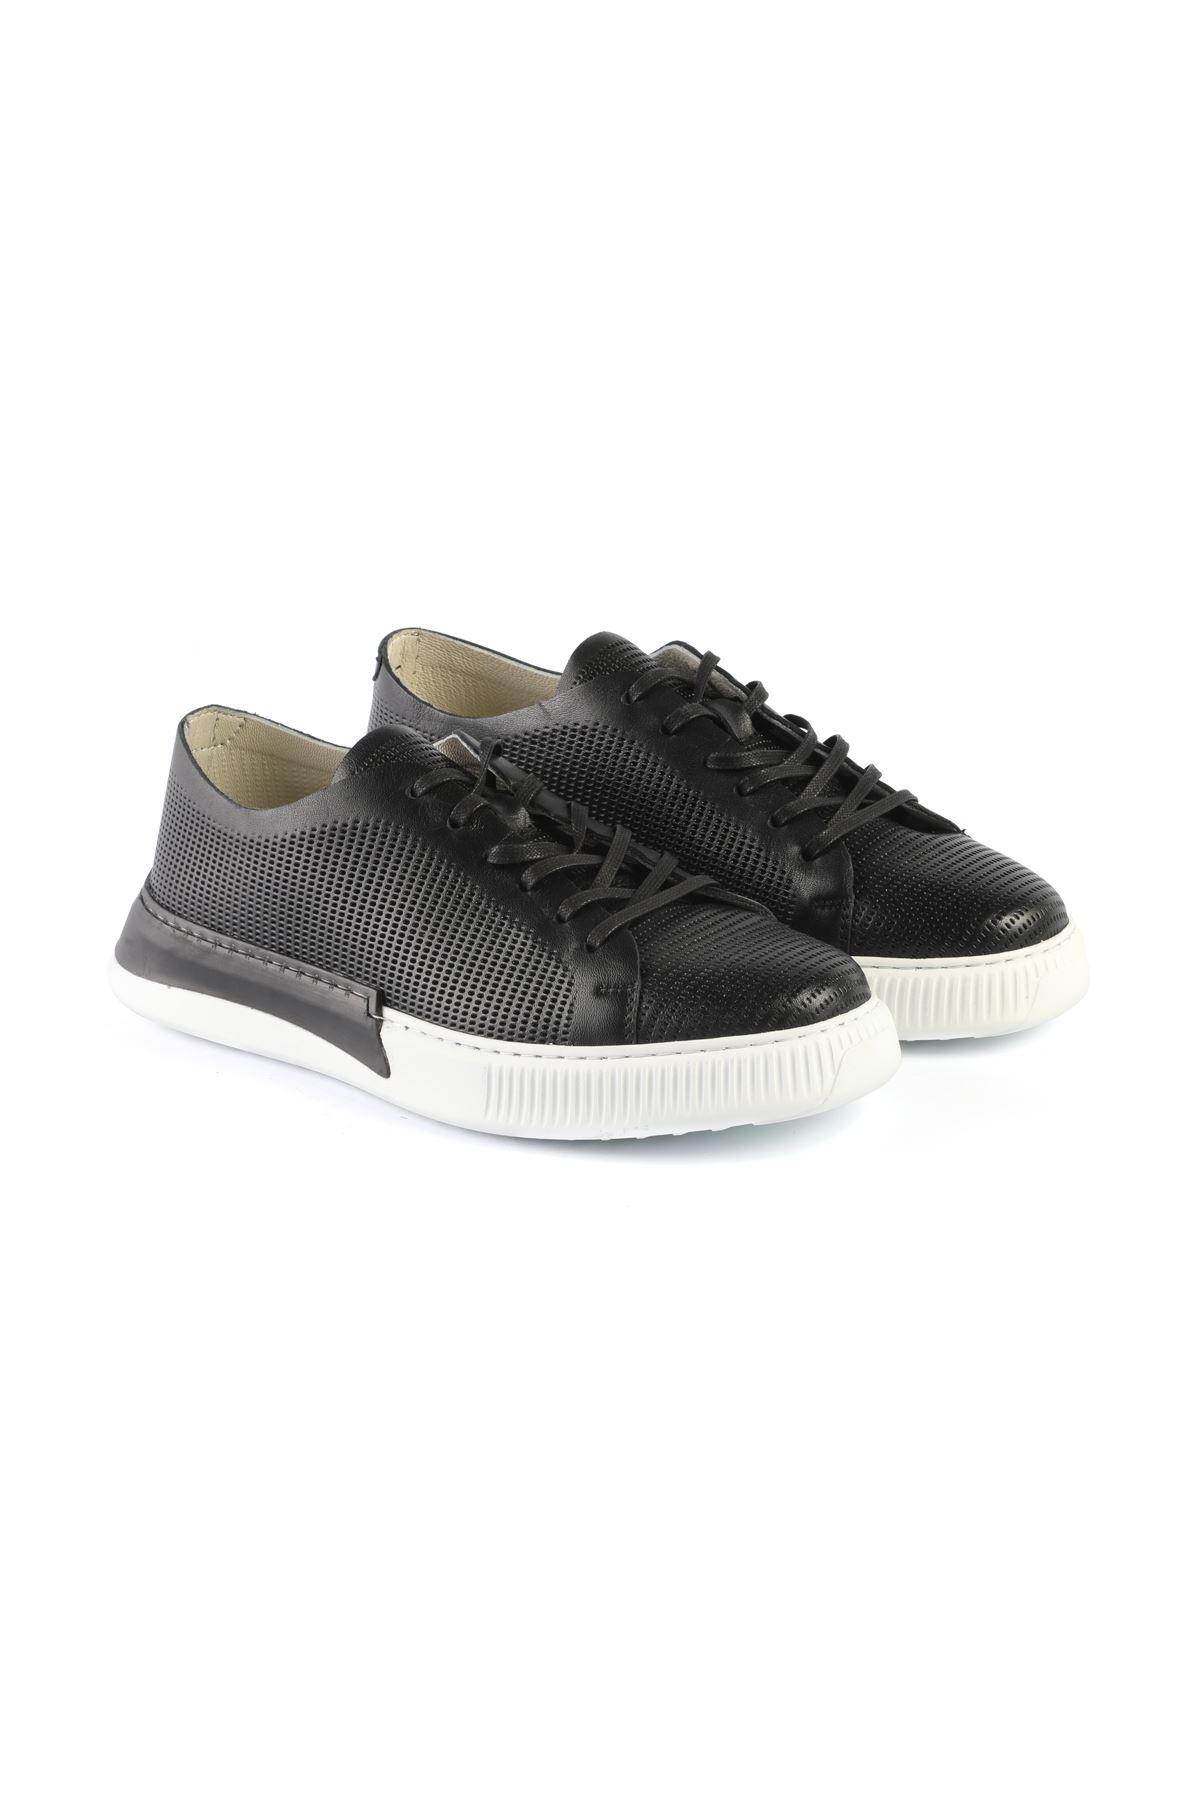 Libero L3411 Black Sneaker Shoes